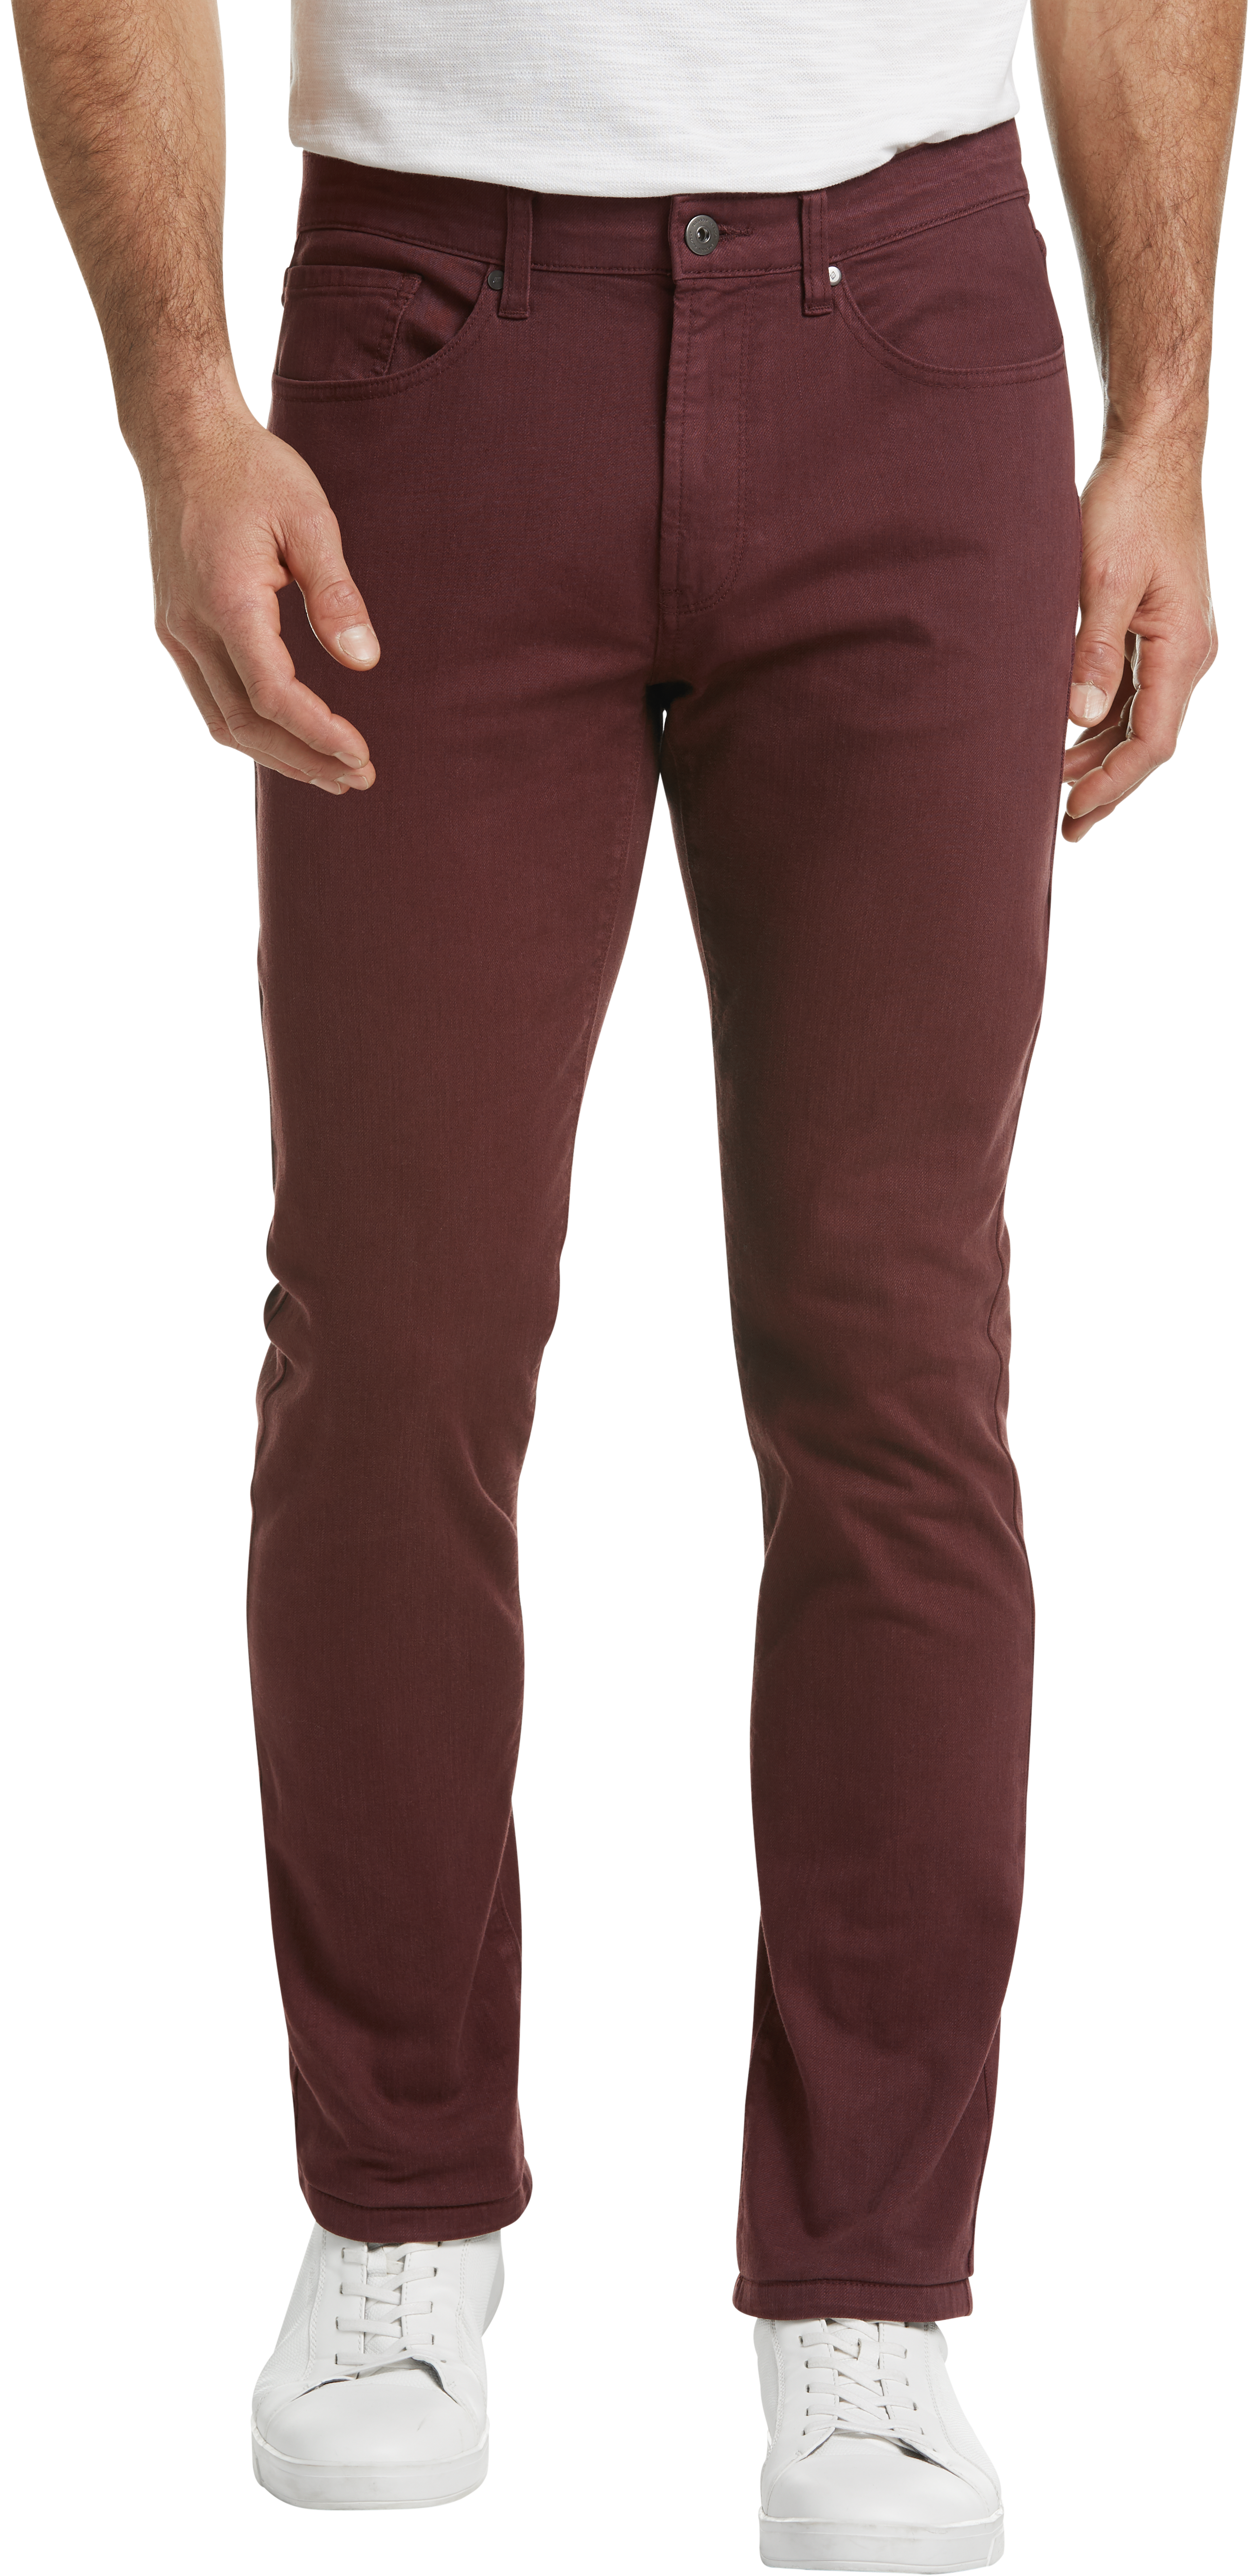 Joseph Abboud Burgundy Slim Fit Jeans - Men's Brands | Men's Wearhouse